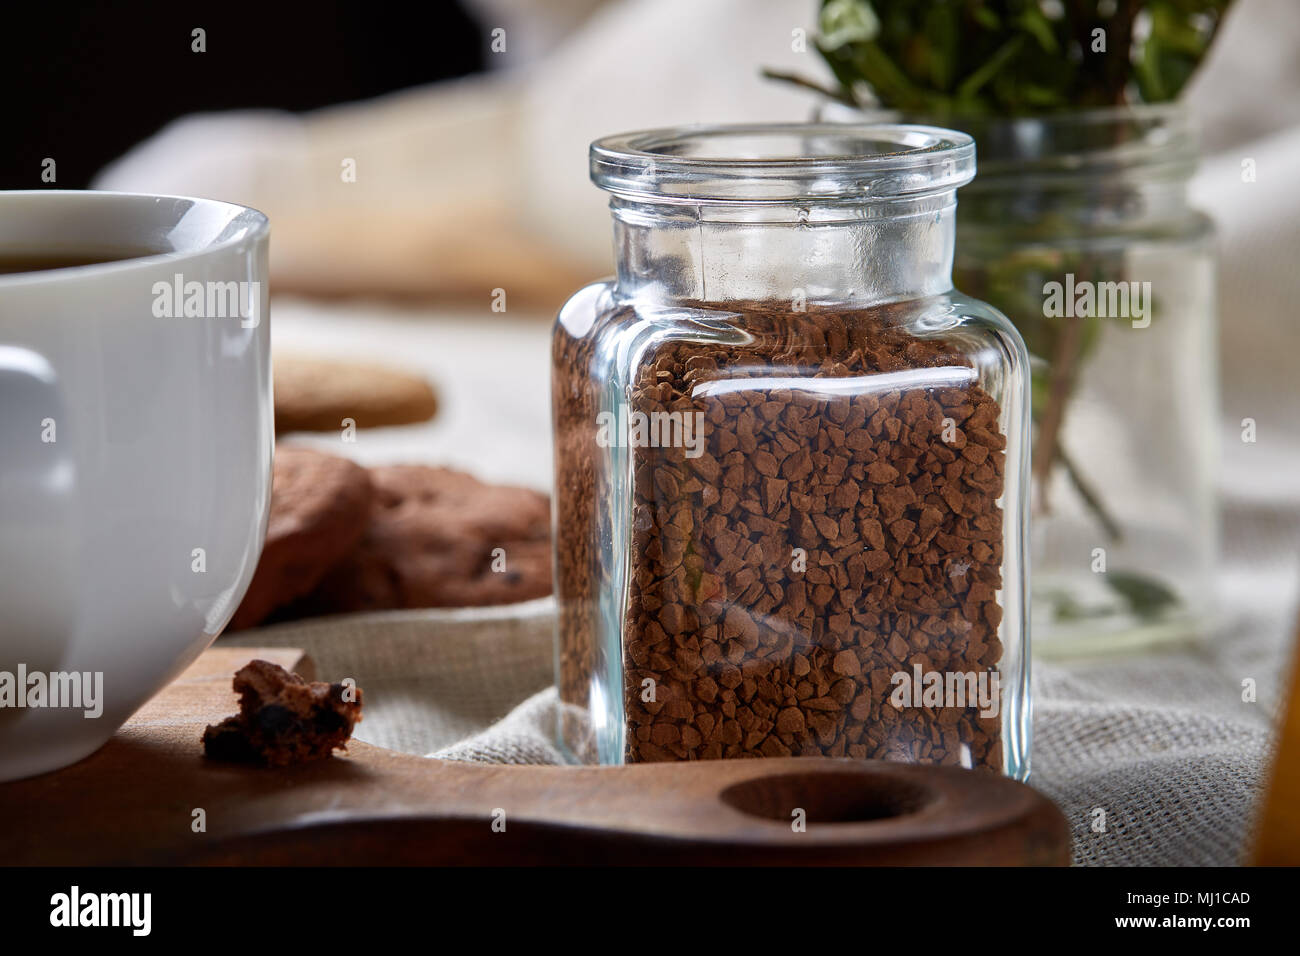 Instant coffee jars Stock Photo by ©ewastudio 91365098